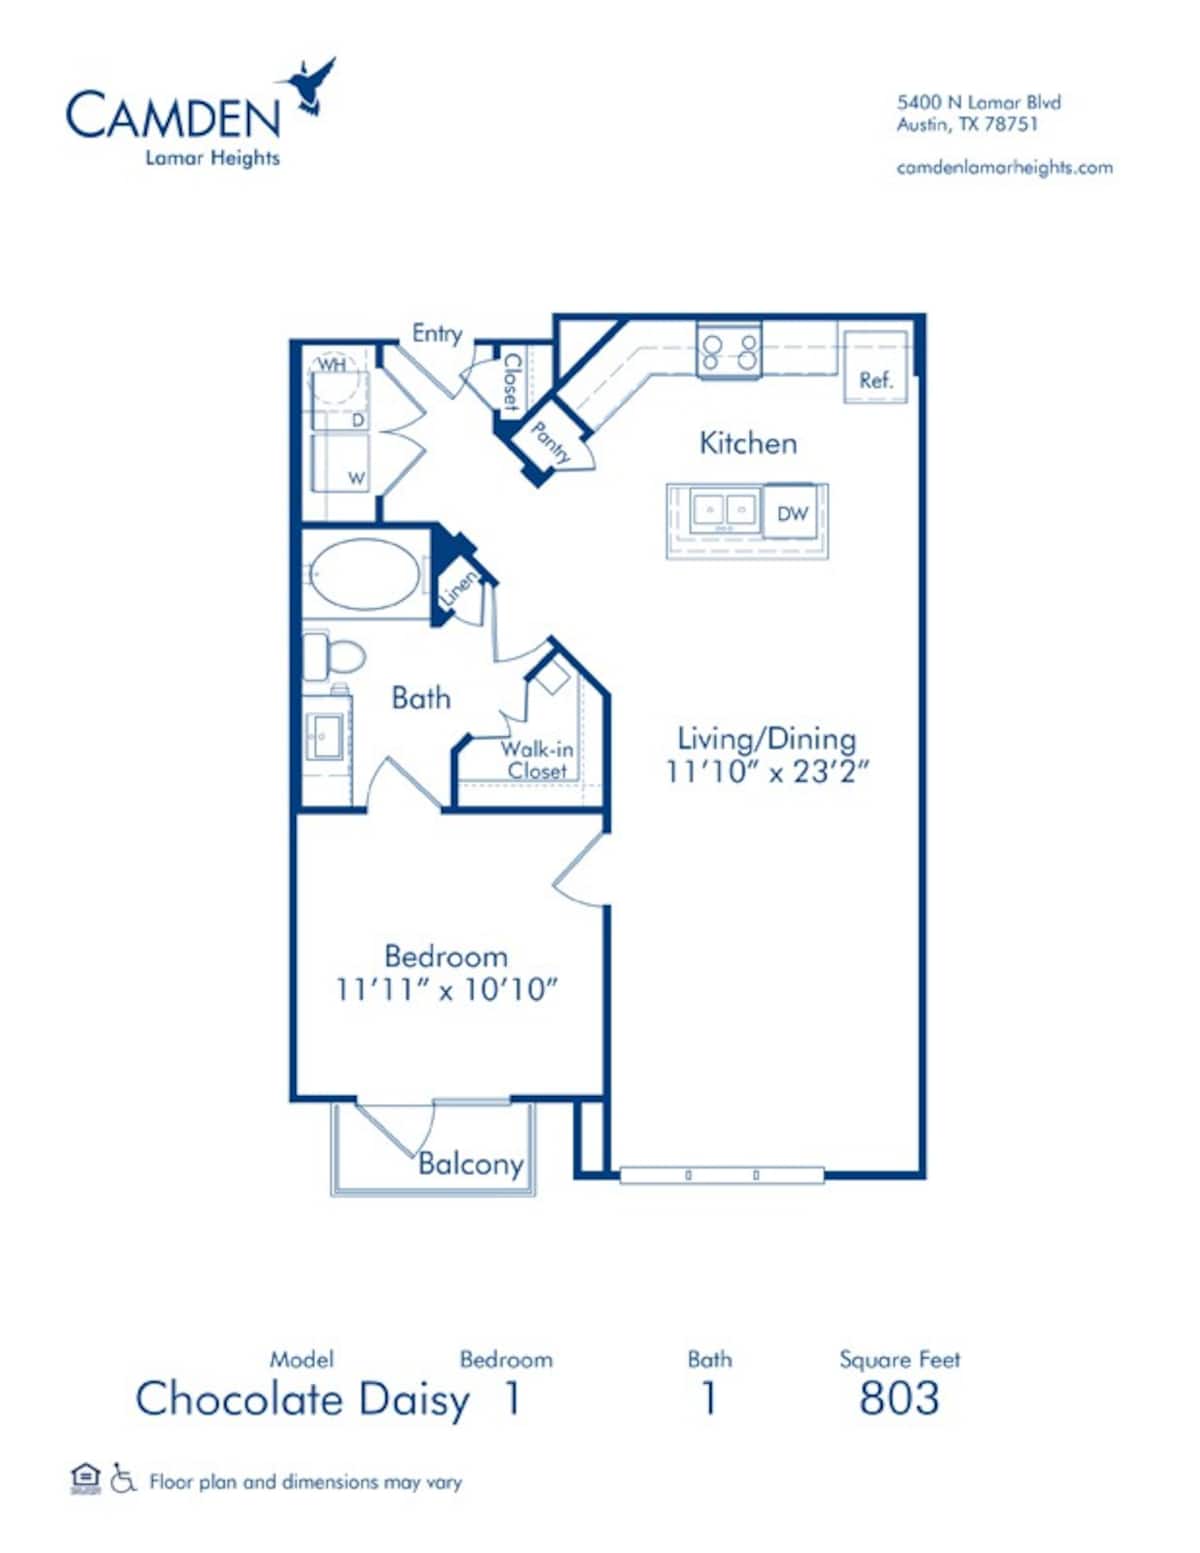 Floorplan diagram for Chocolate Daisy, showing 1 bedroom